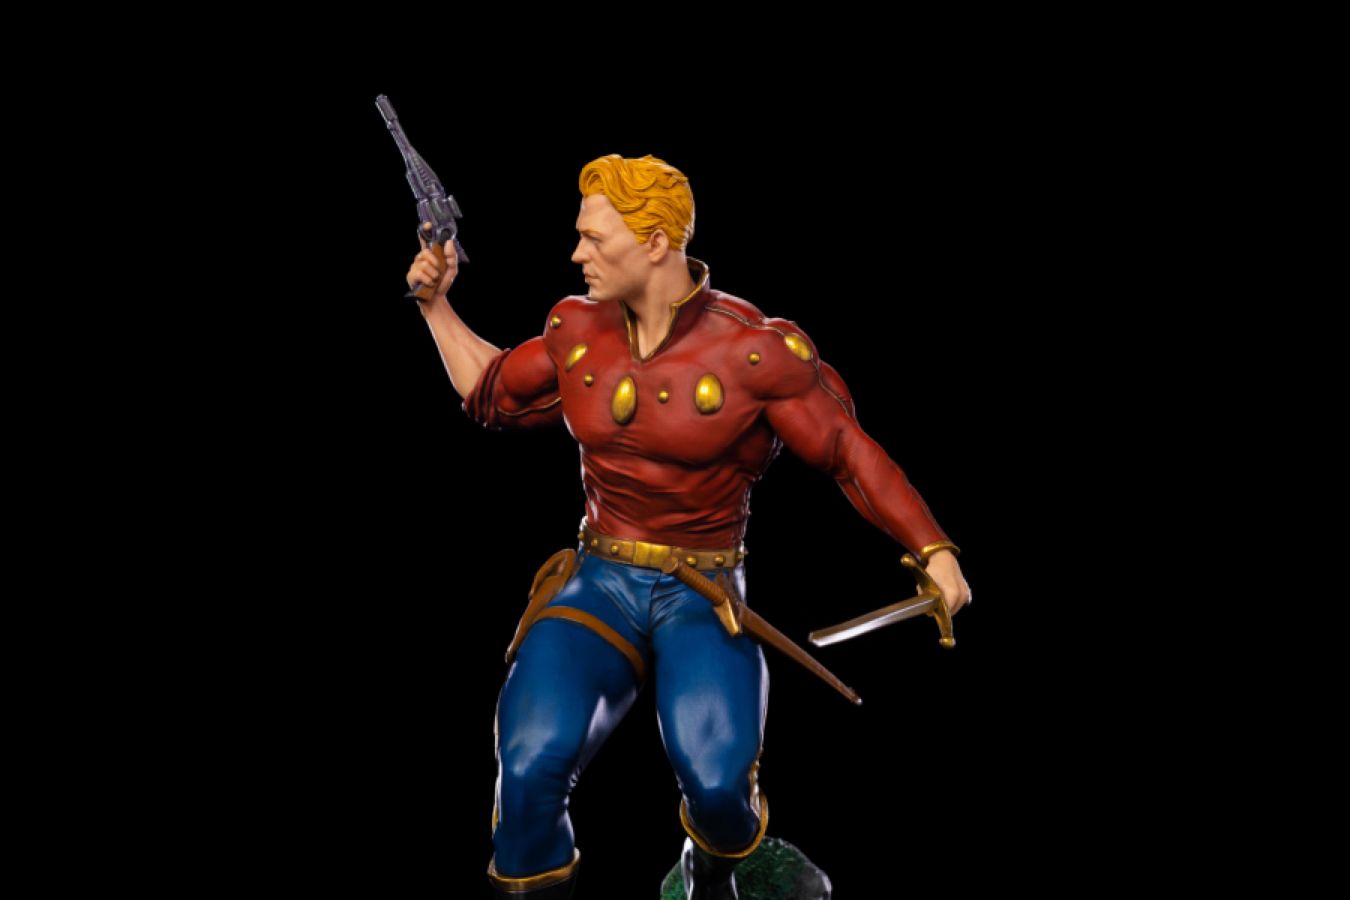 Flash Gordon - Flash Gordon Deluxe 1:10 Scale Statue